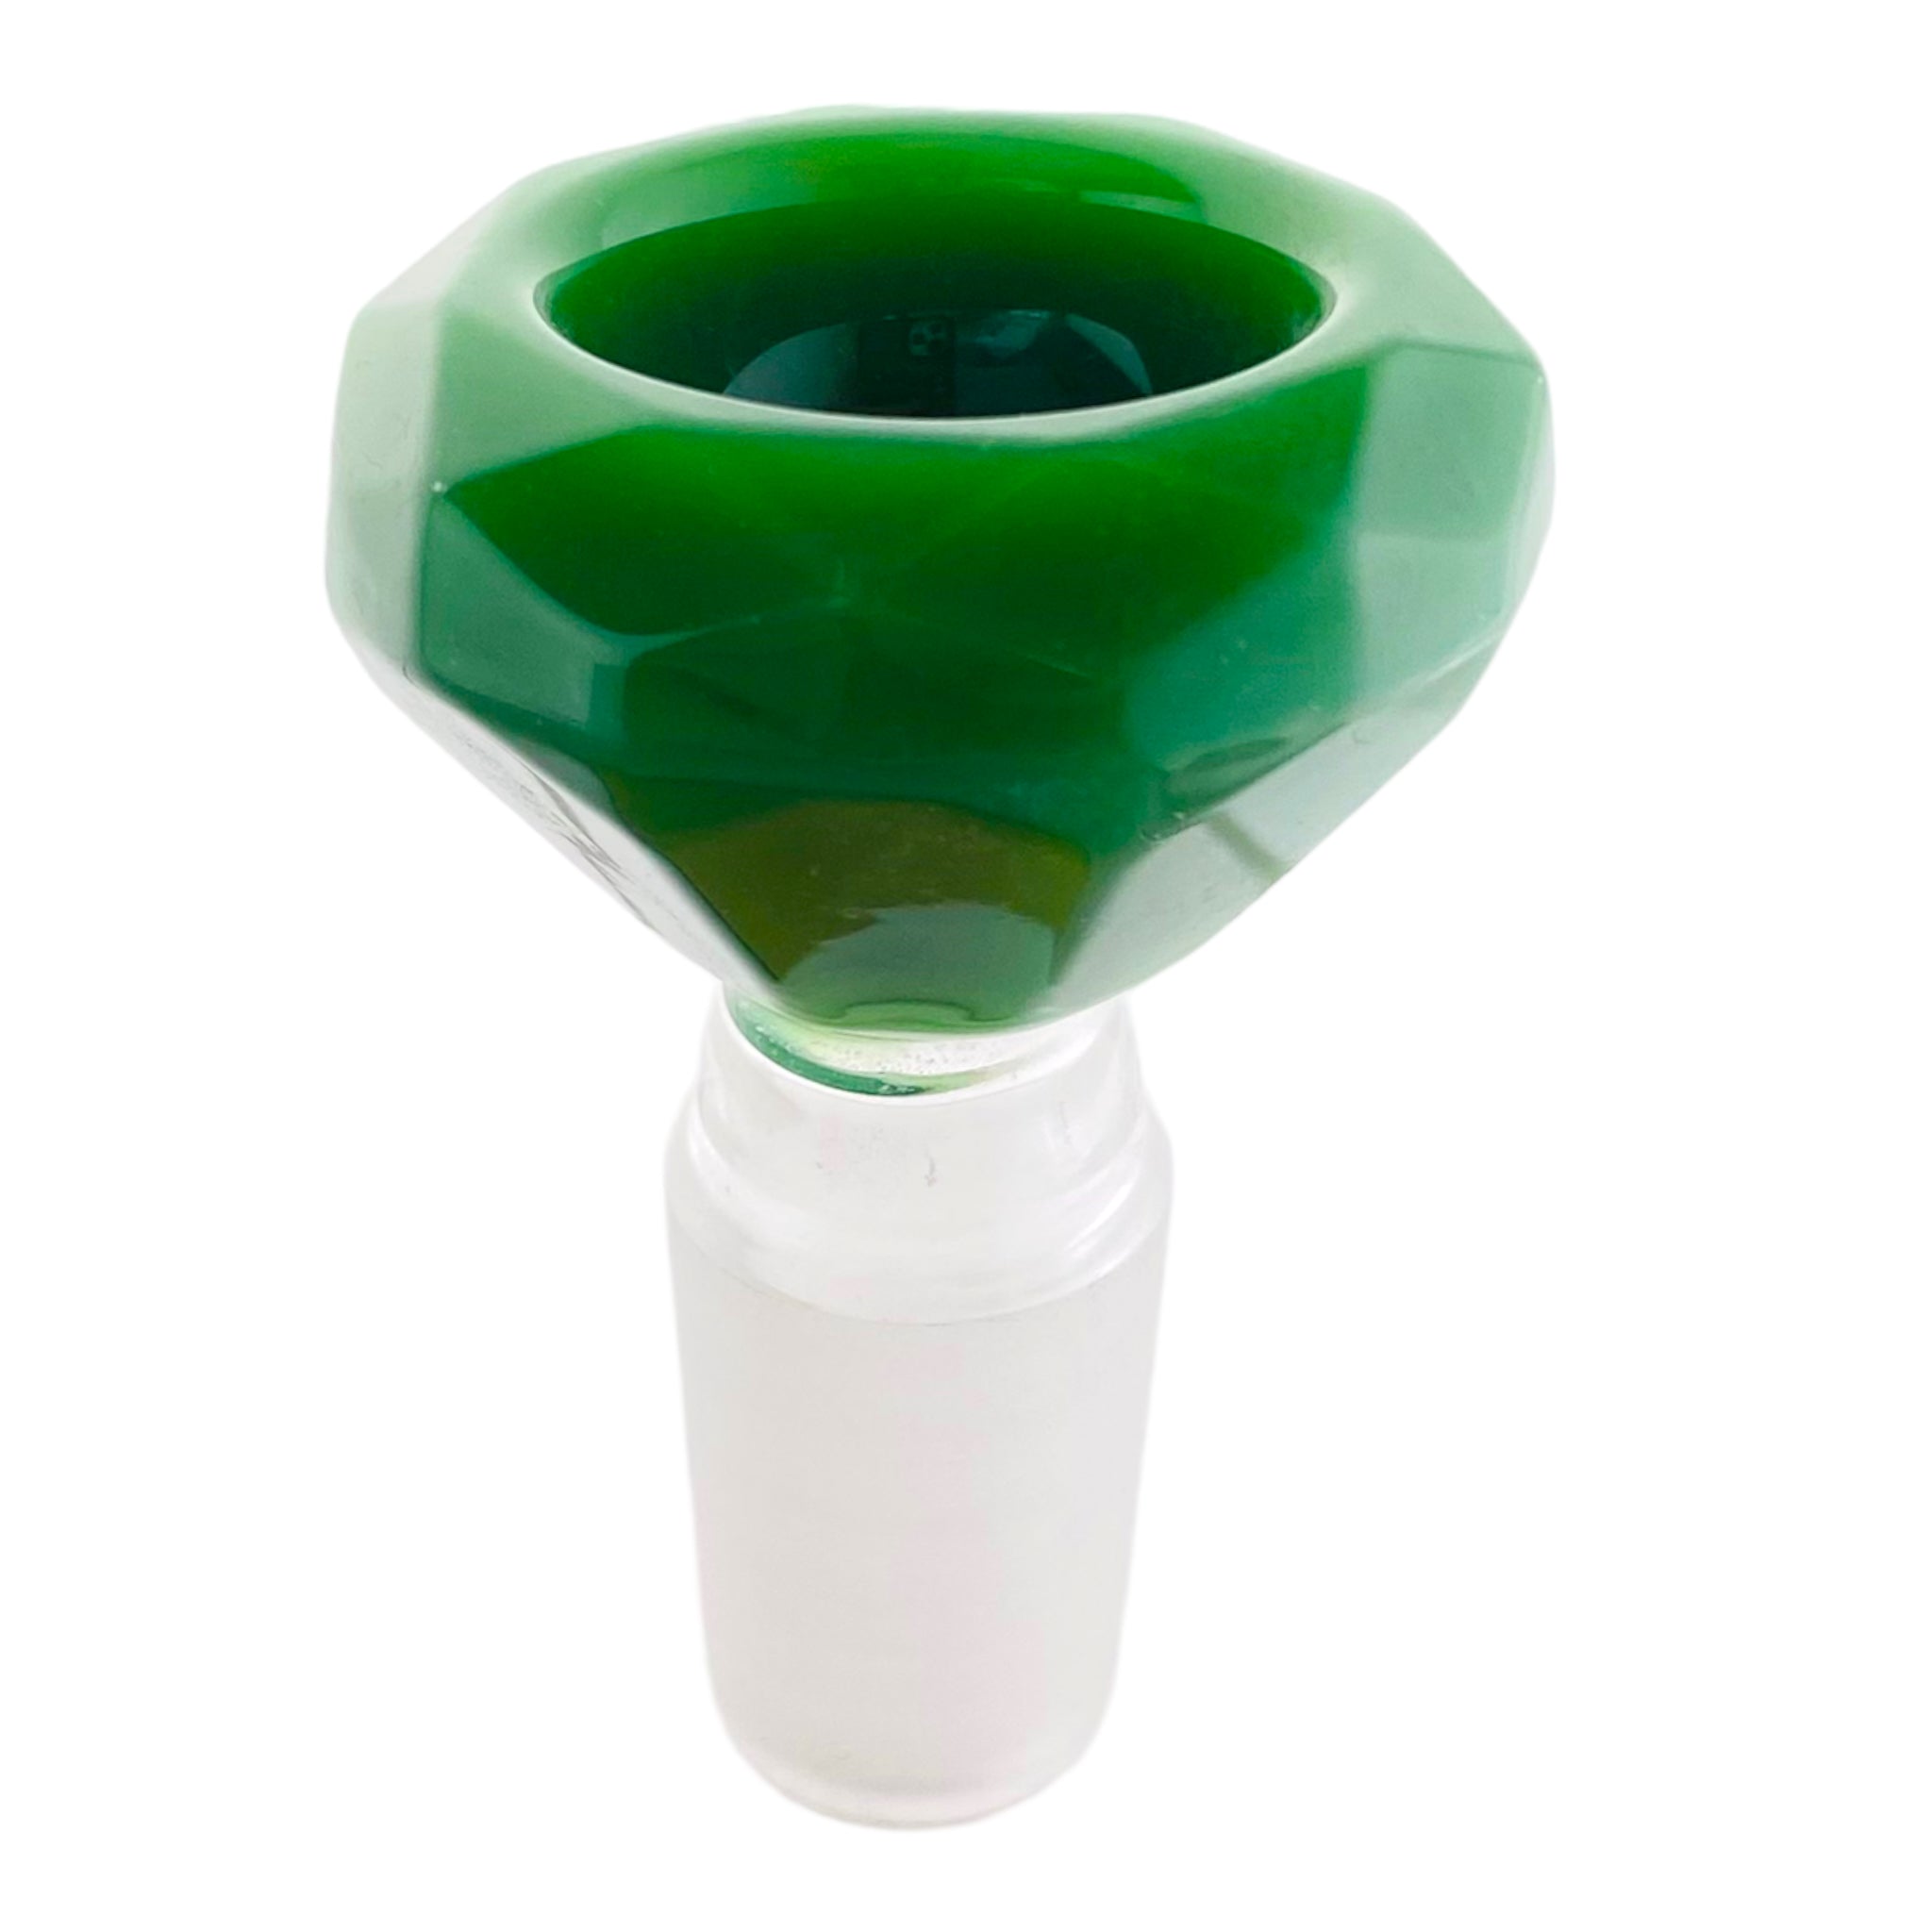 18mm Flower Bowl - Faceted Diamond Glass Bong Bowl Piece - Jade